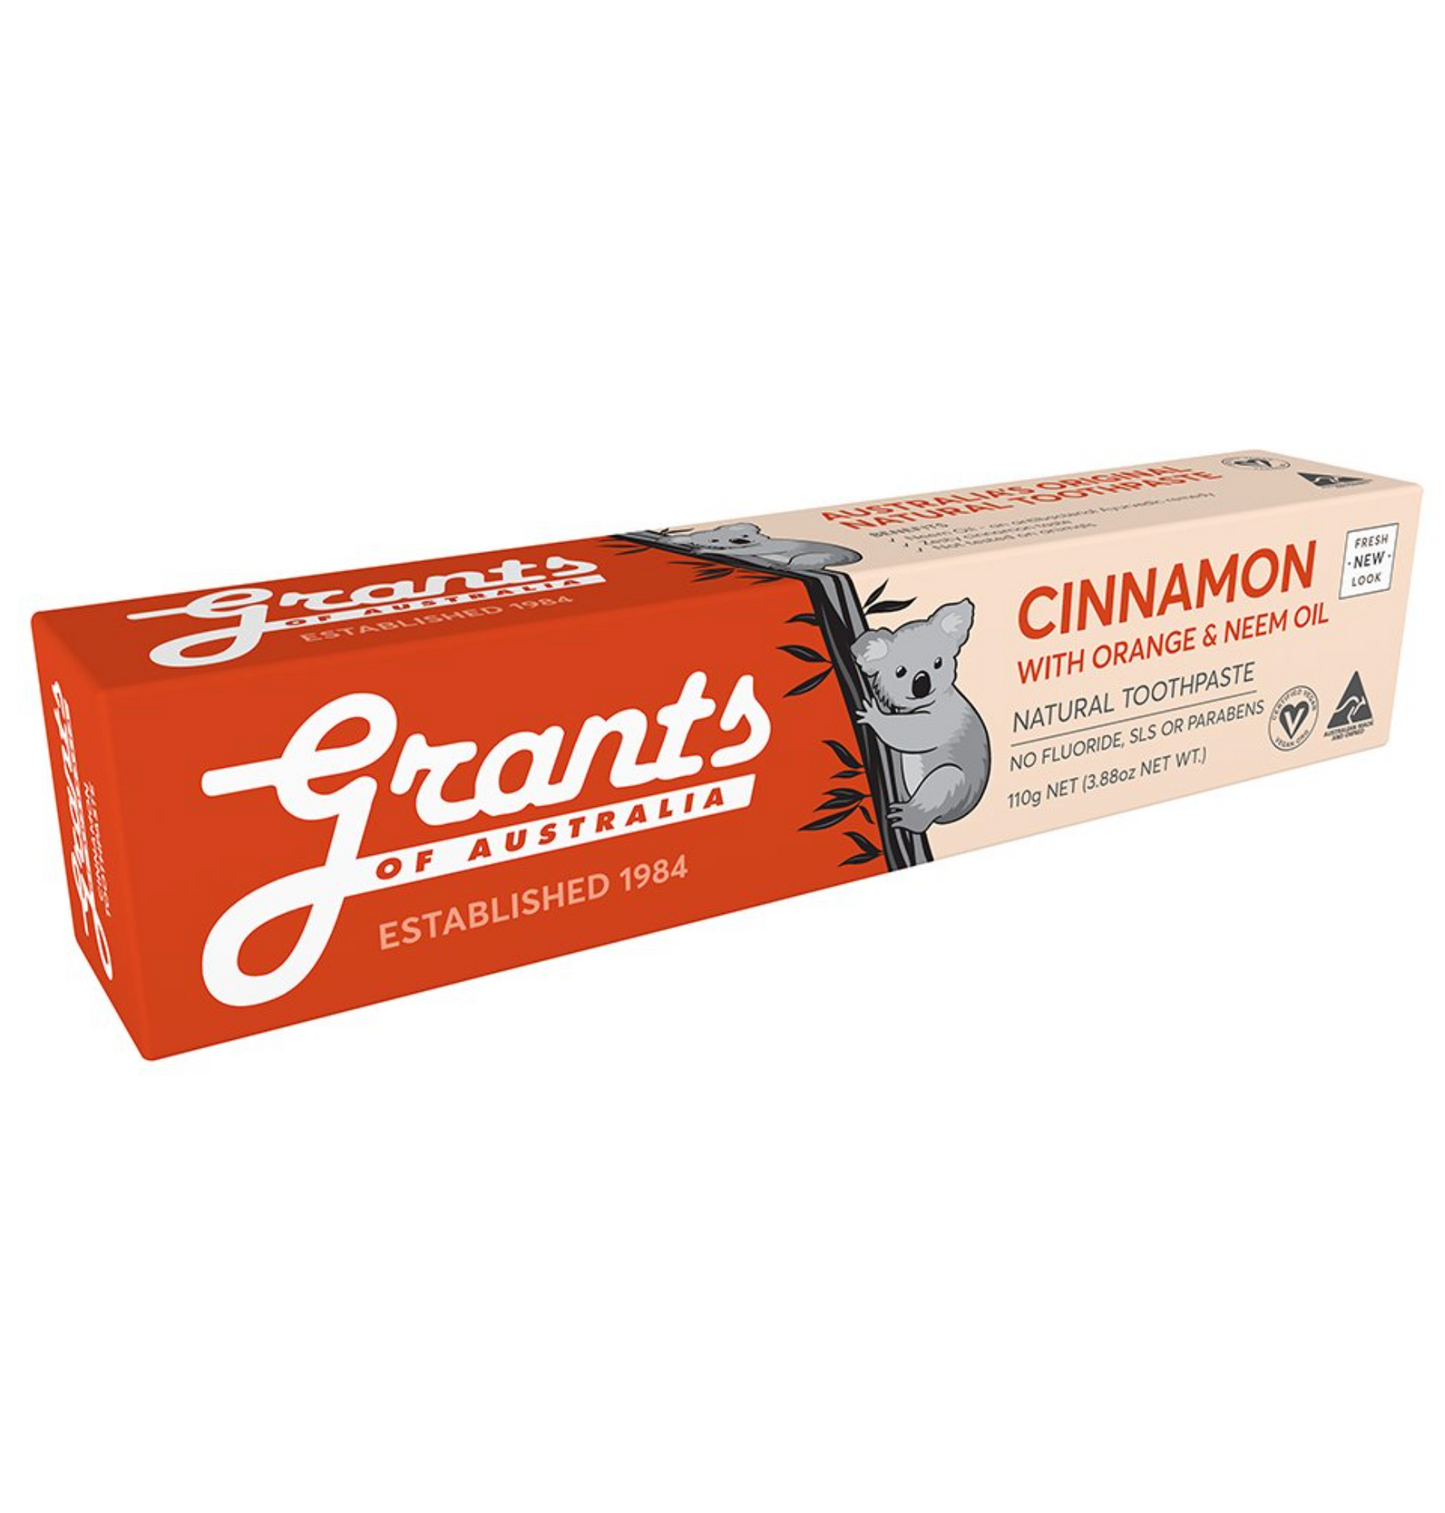 Grants Natural Toothpaste 110g, Cinnamon With Orange & Neem Oil, Fluoride Free